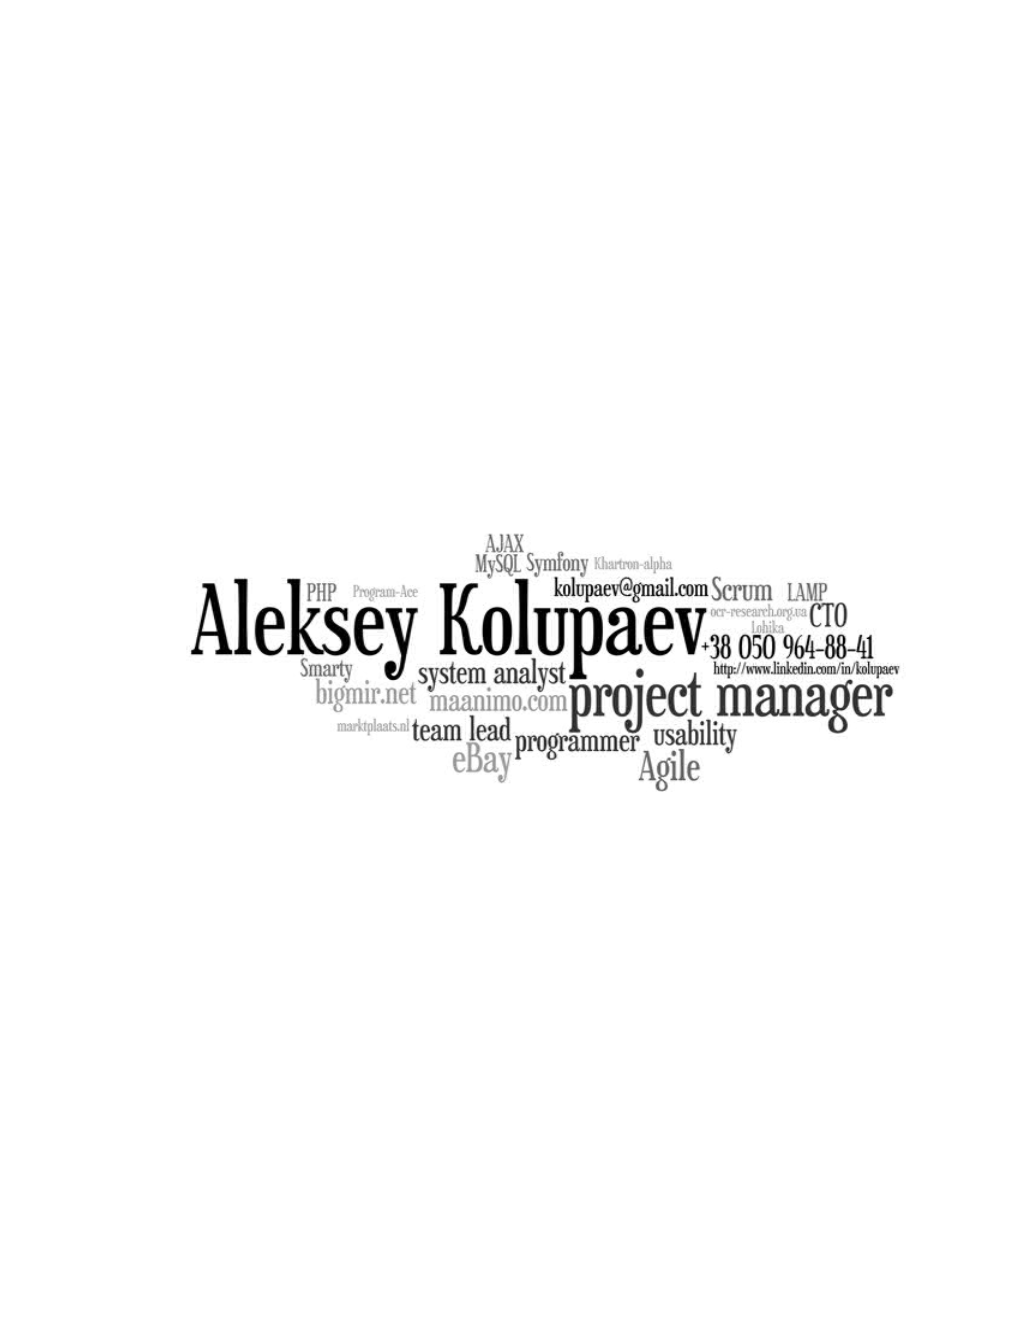 Aleksey Kolupaev